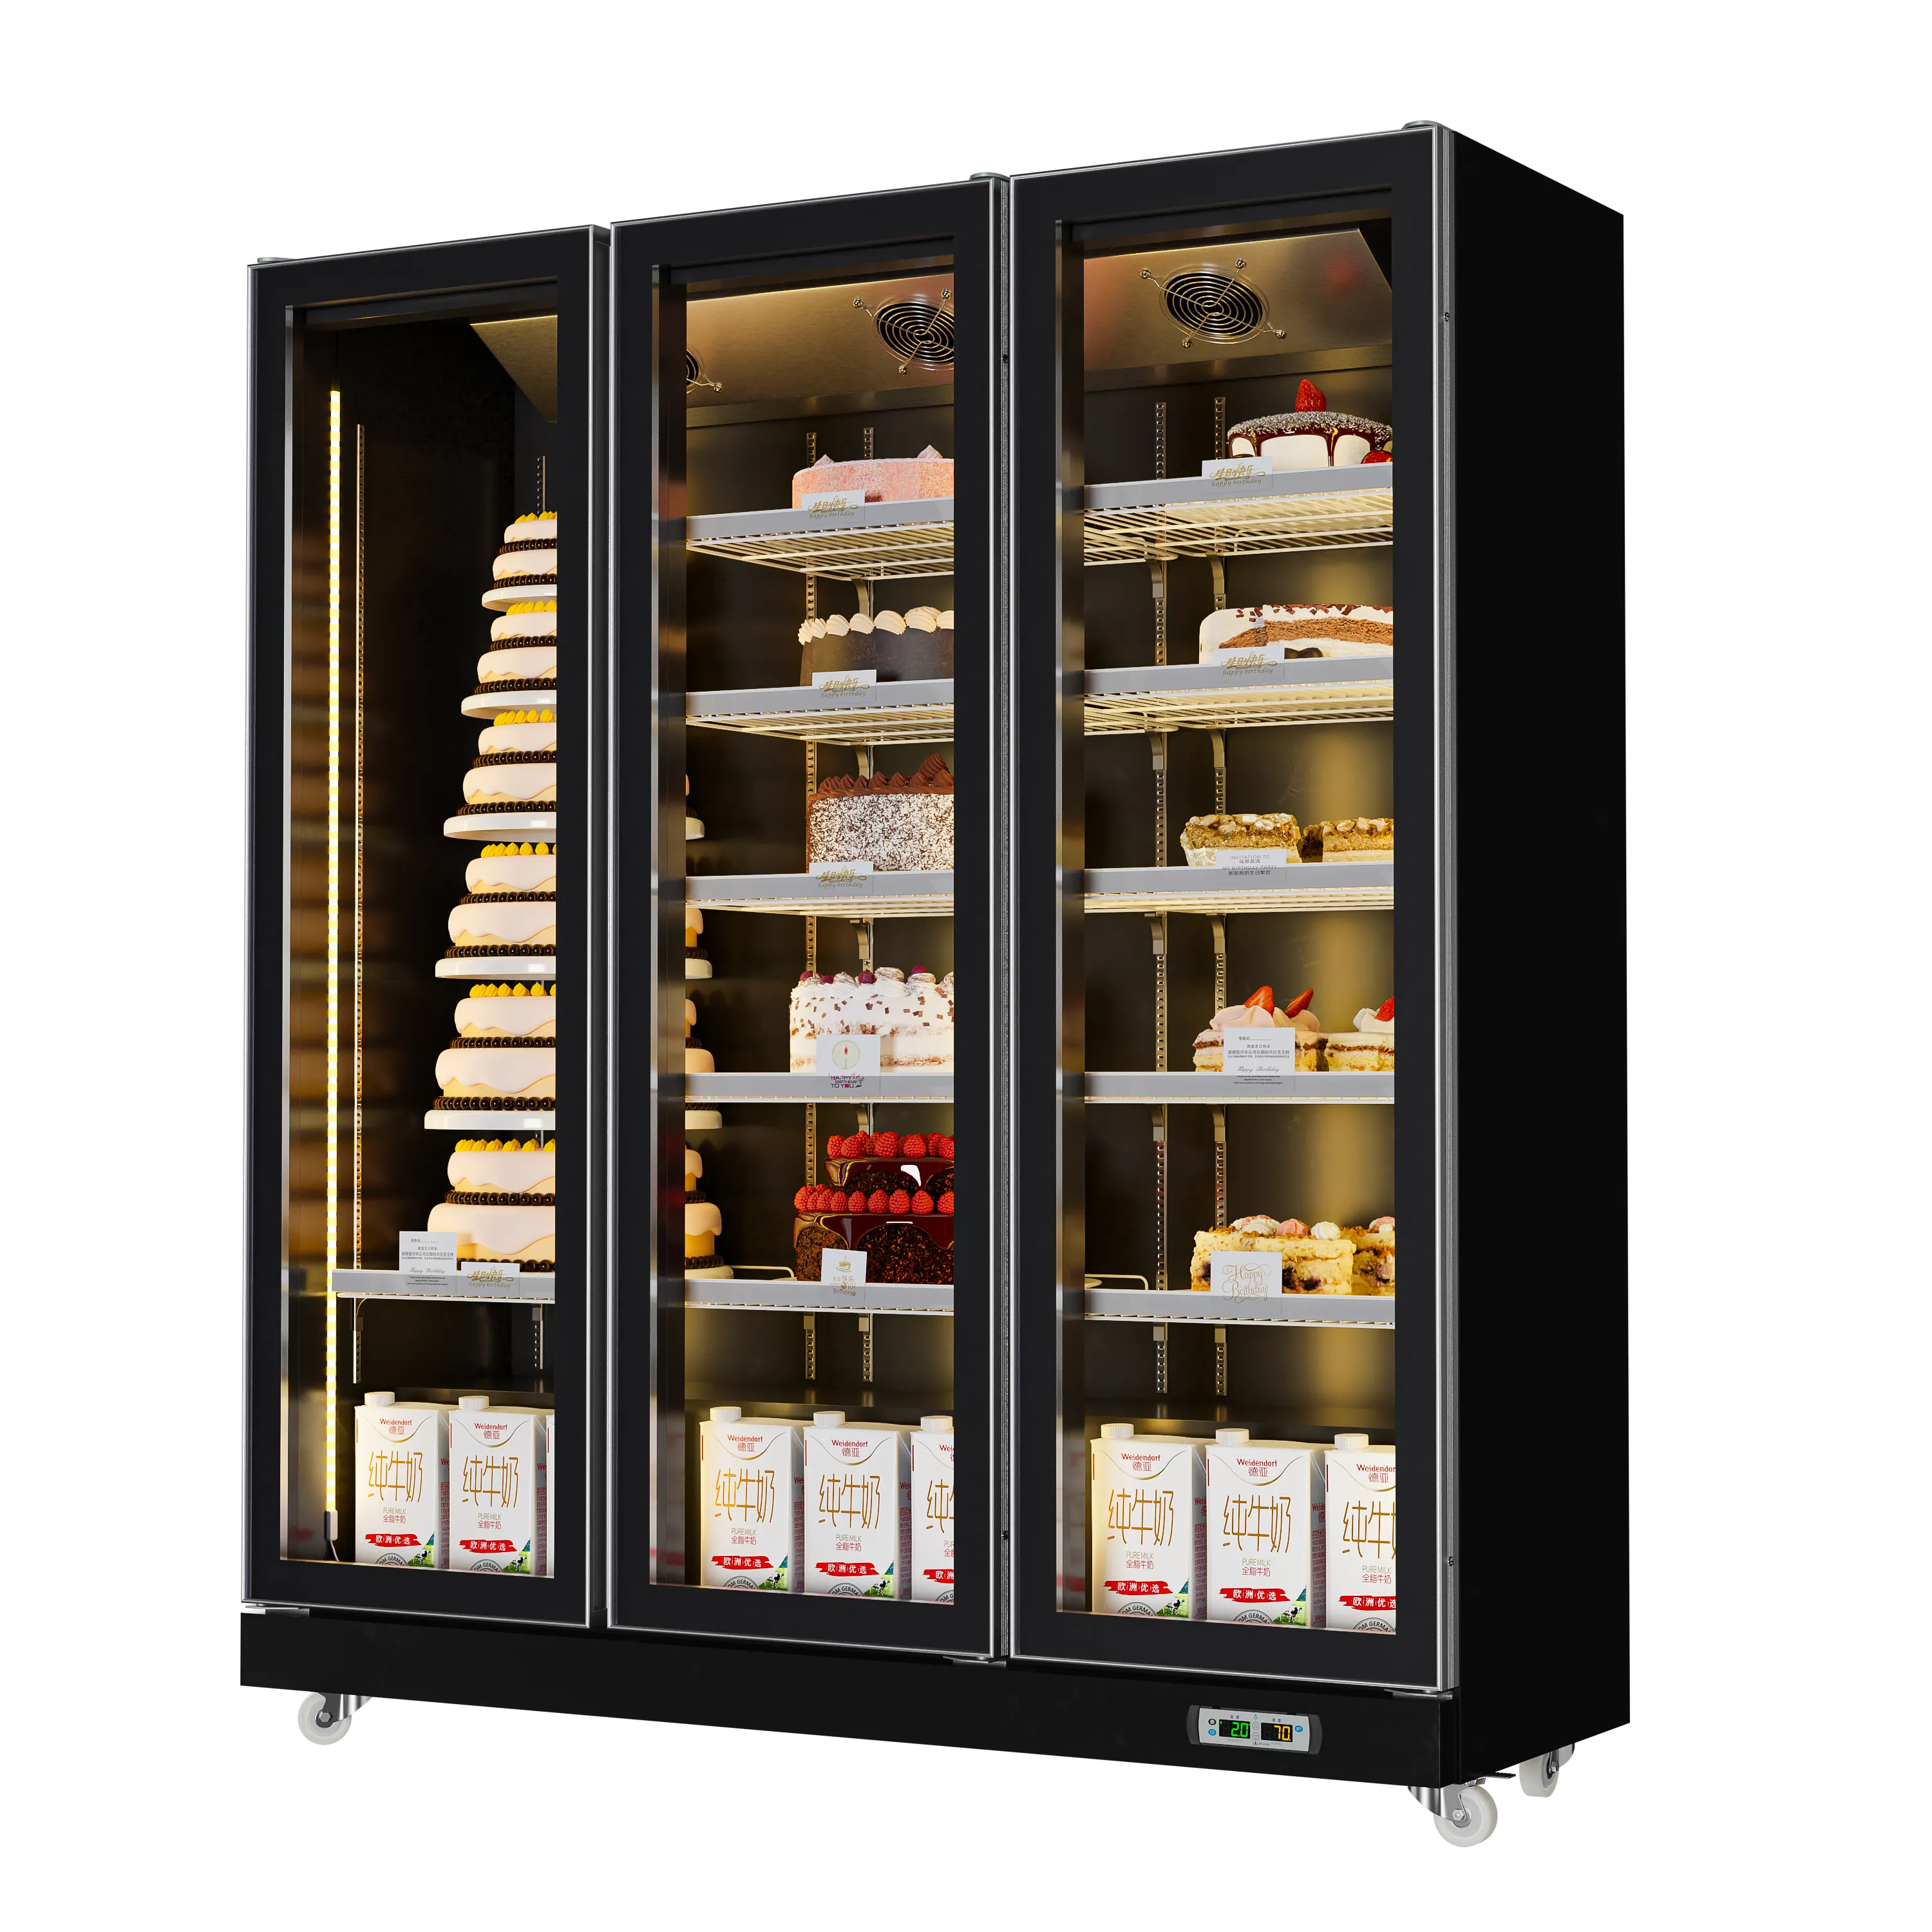 Enhancing Merchandising with Display Refrigerators